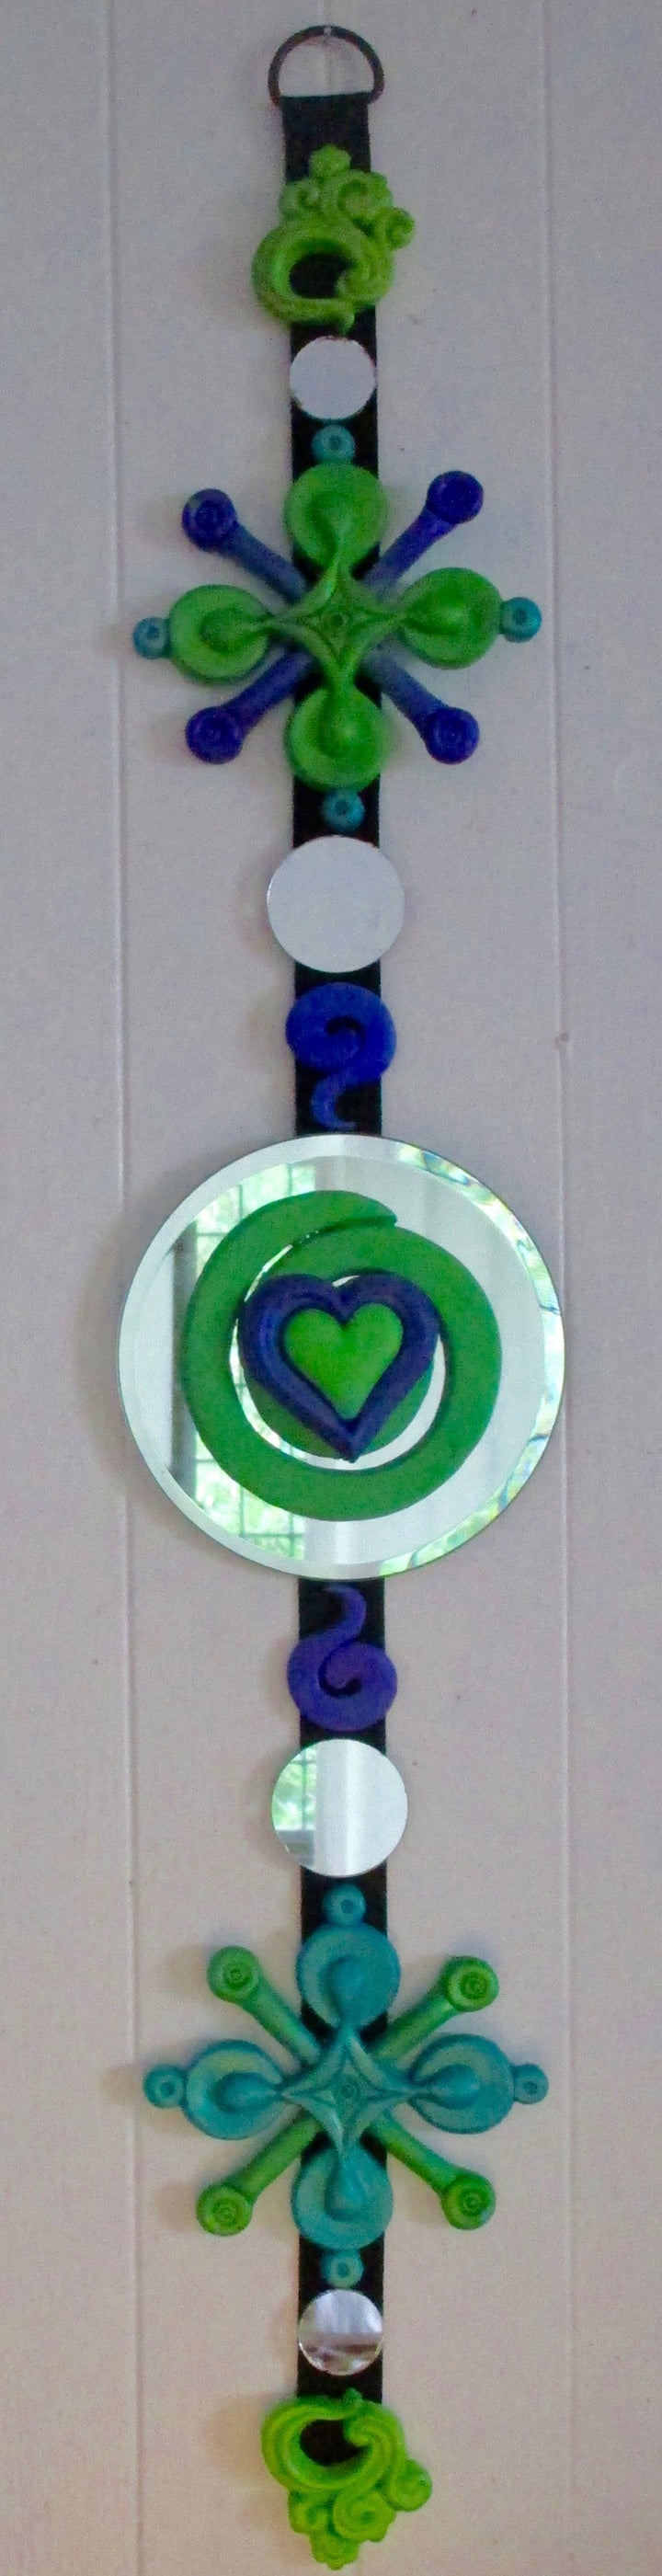 green & purple sculptural wall hanging art swirly heart on round mirror feng shui dangle